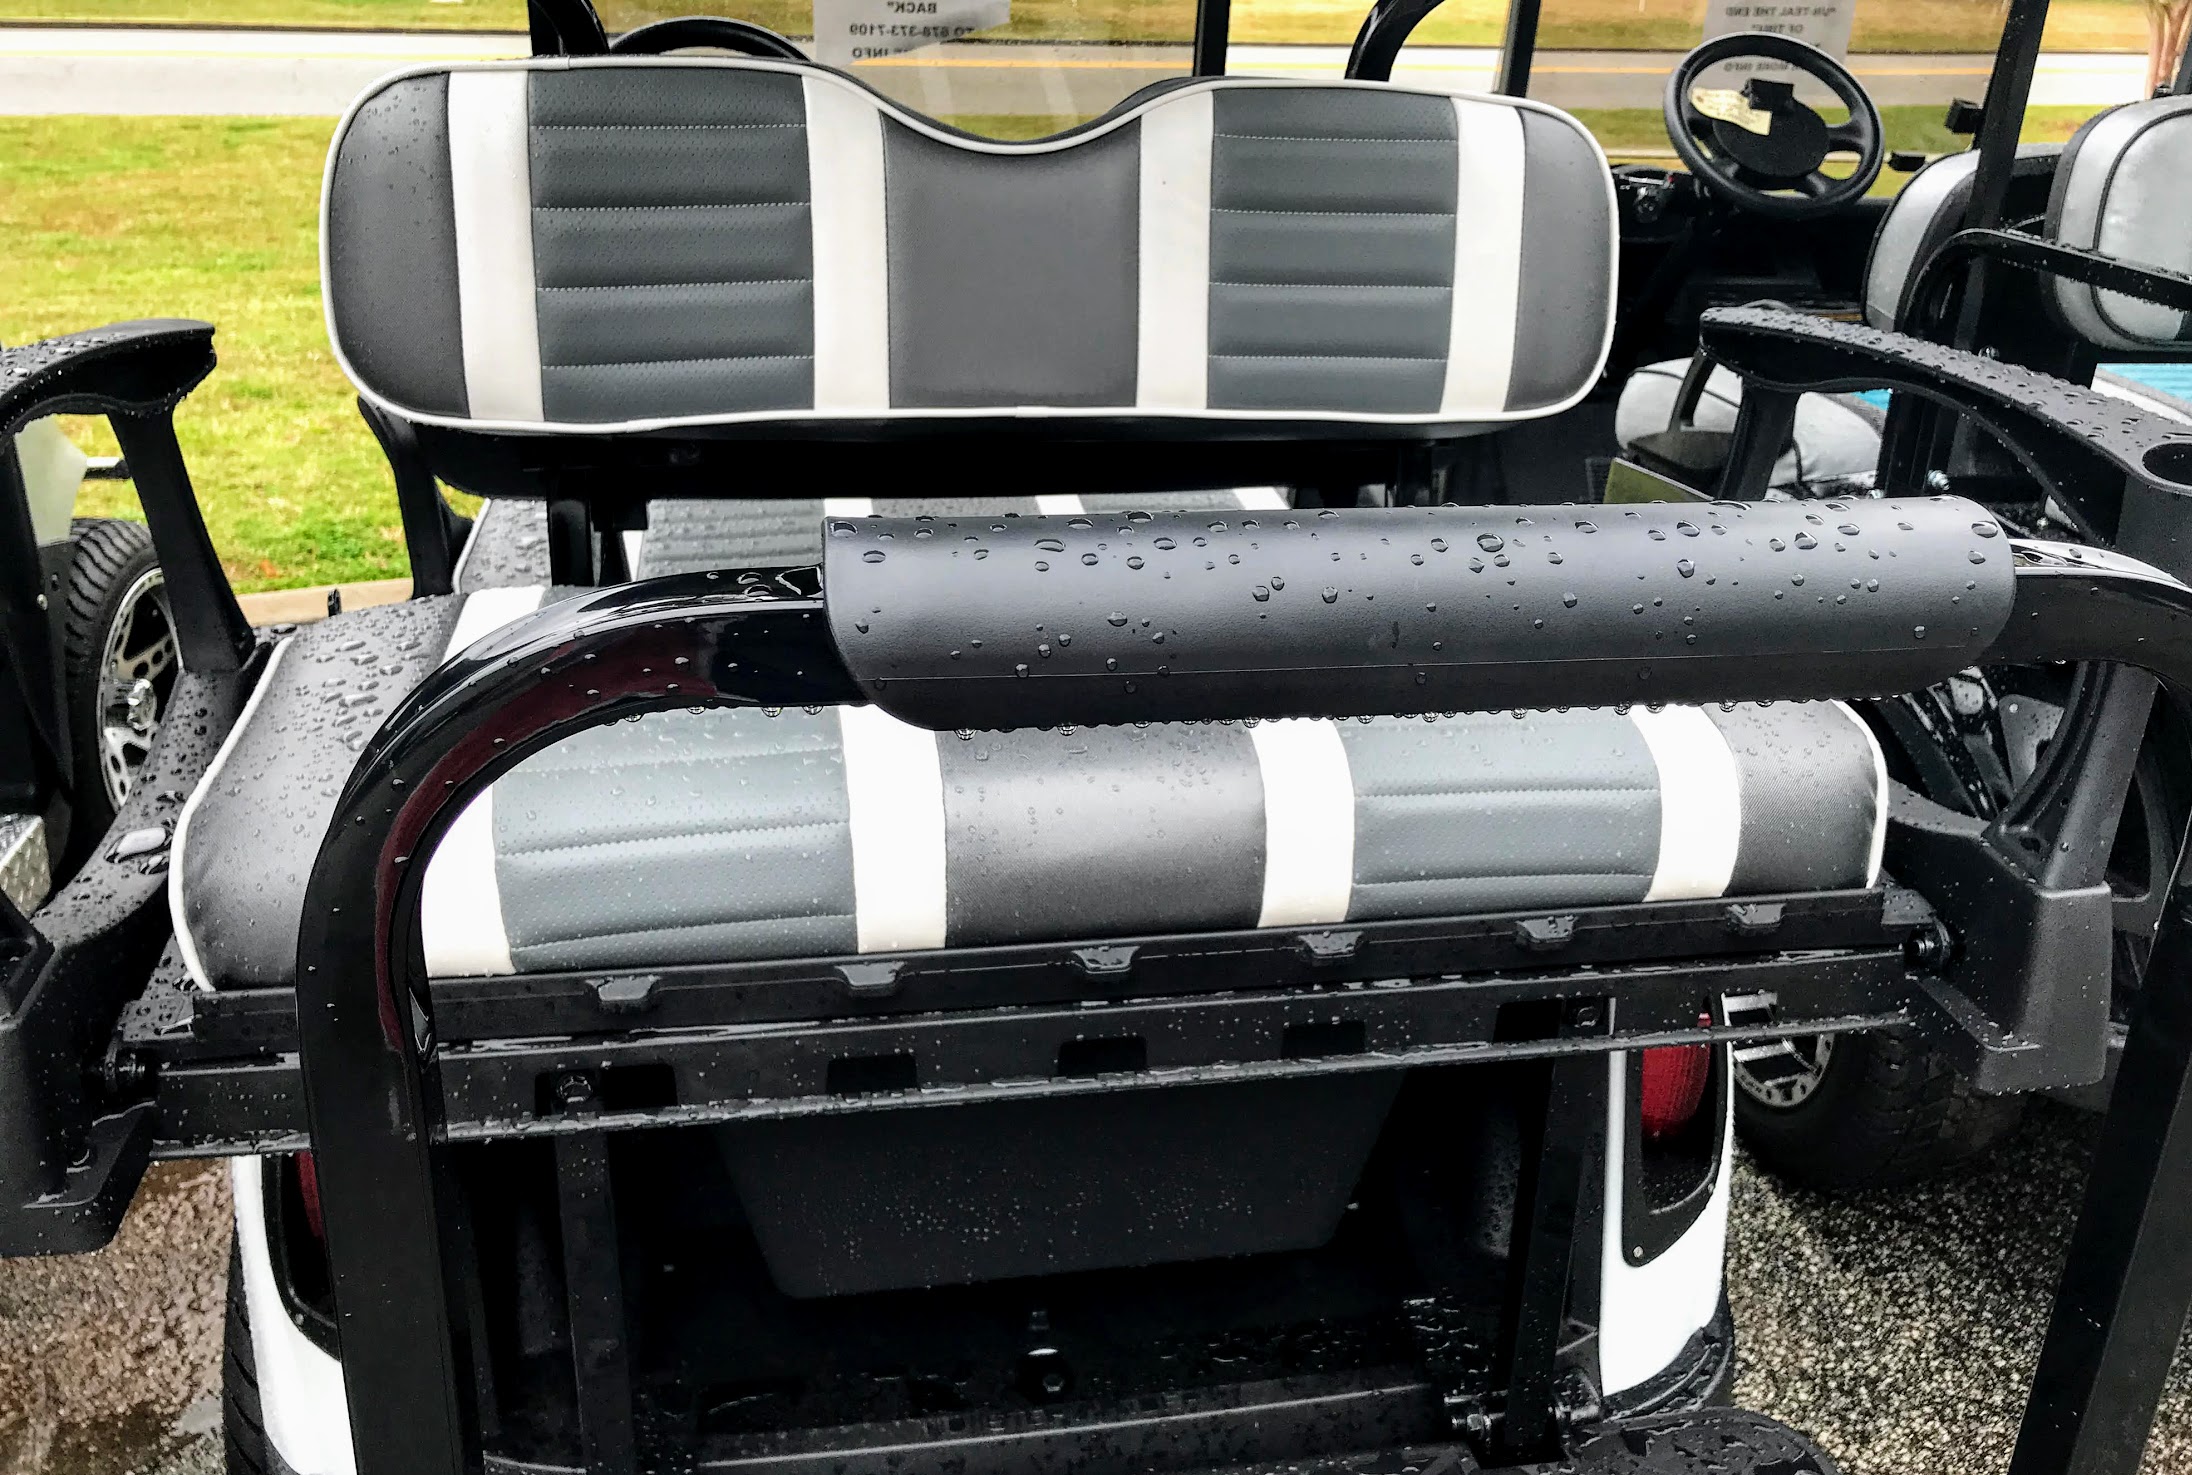 club car precedent accessories: add a golf cart rear seat for extra passengers